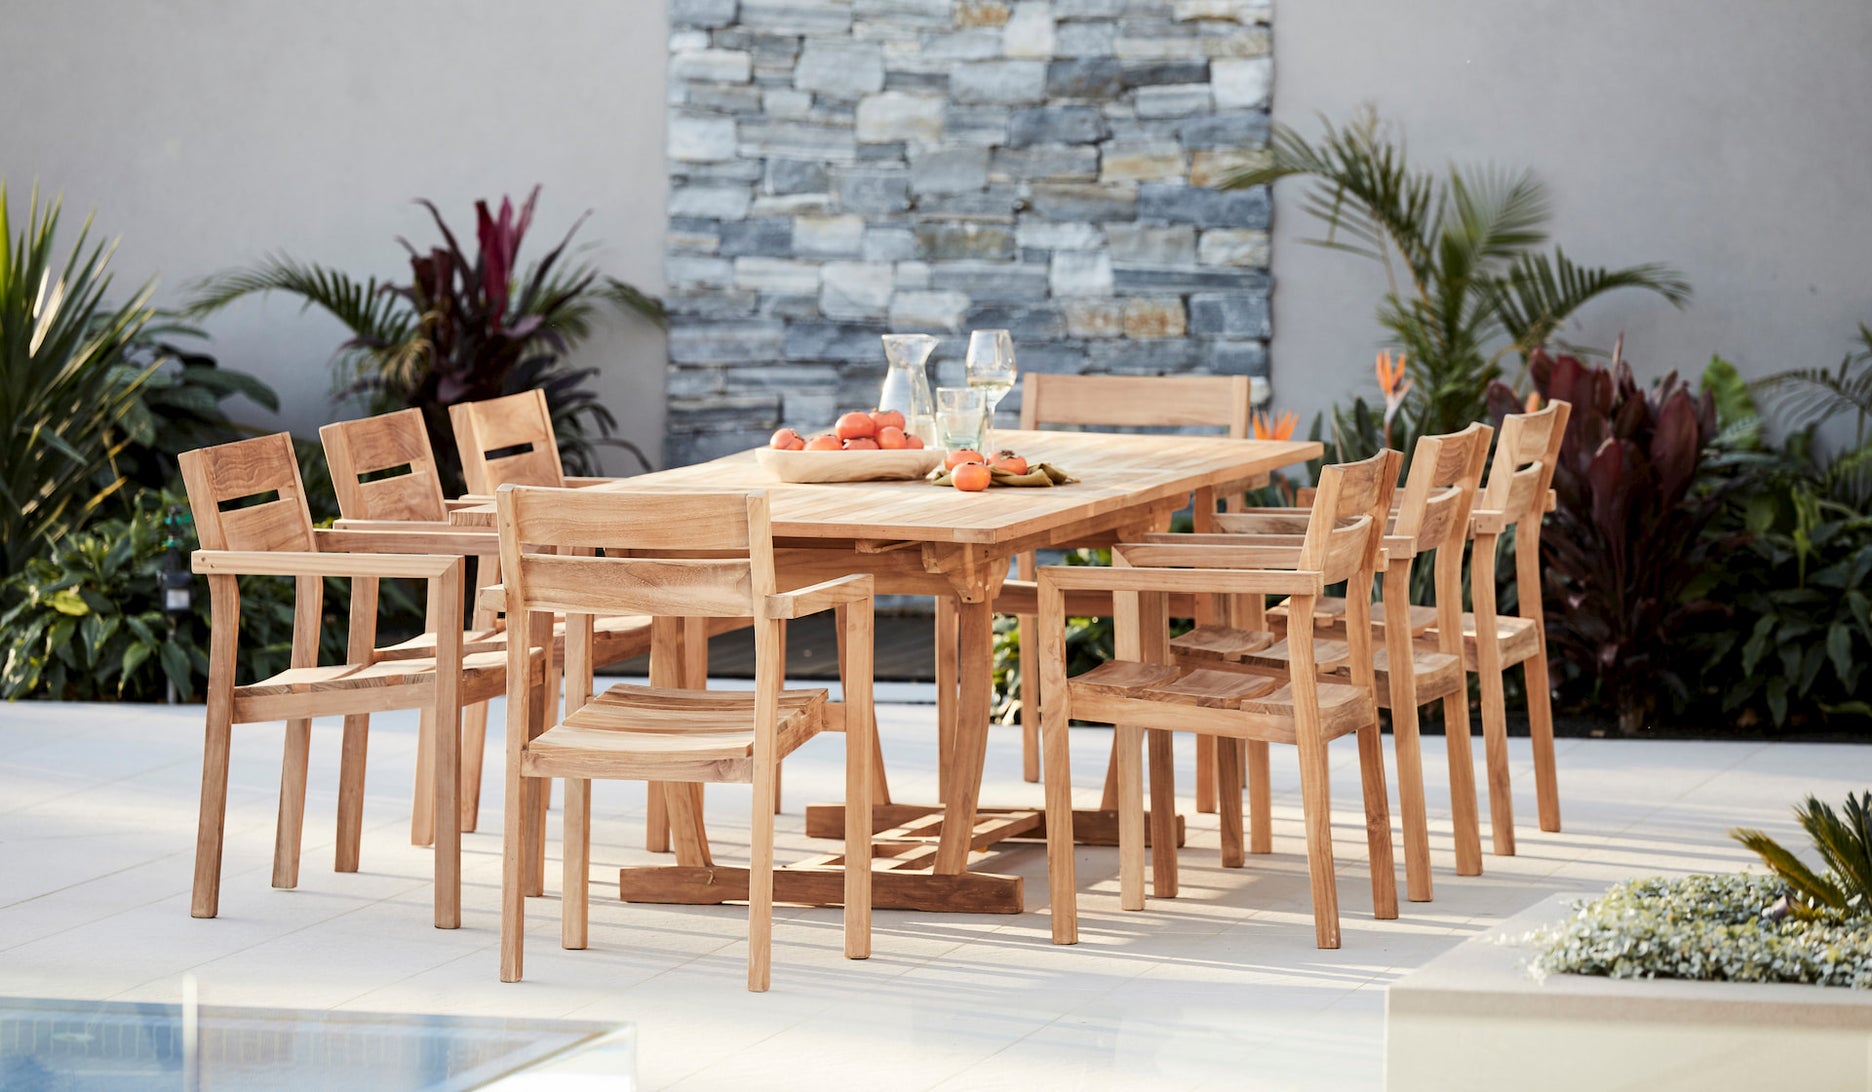 The 6 reasons to buy outdoor teak furniture